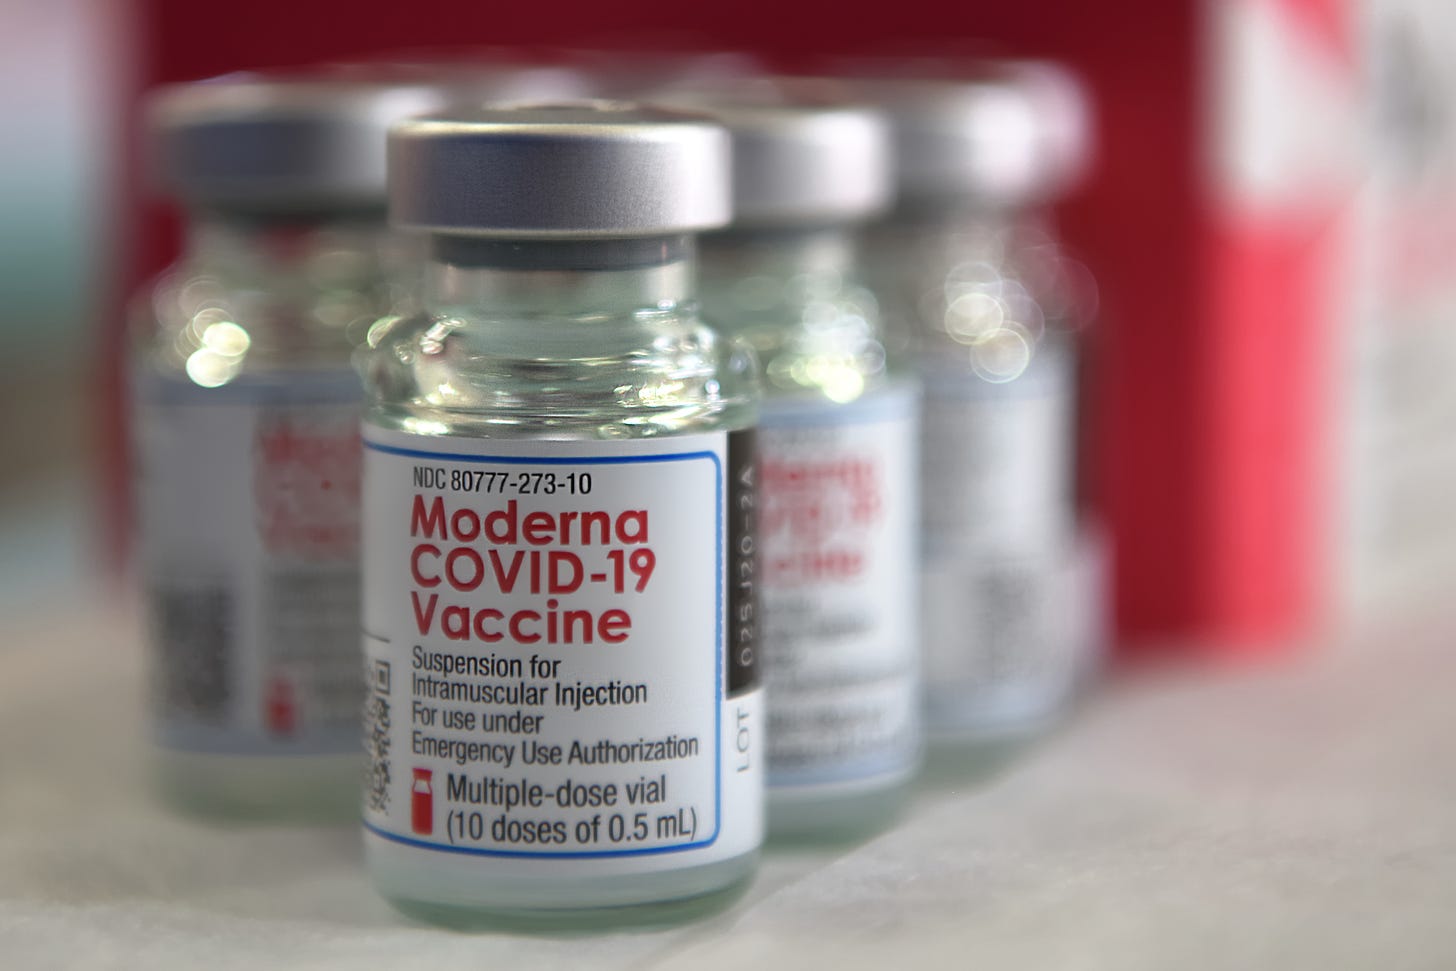 Moderna COVID-19 vaccine - Wikipedia